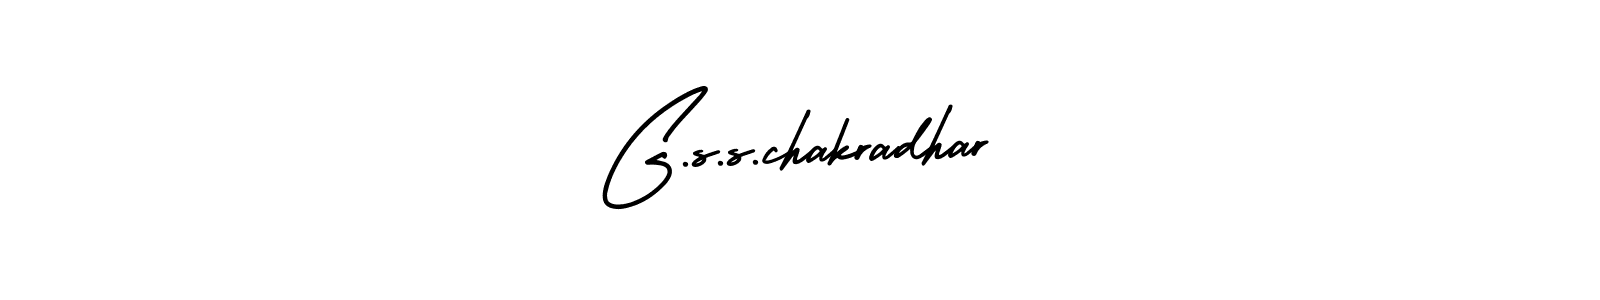 How to Draw G.s.s.chakradhar signature style? AmerikaSignatureDemo-Regular is a latest design signature styles for name G.s.s.chakradhar. G.s.s.chakradhar signature style 3 images and pictures png